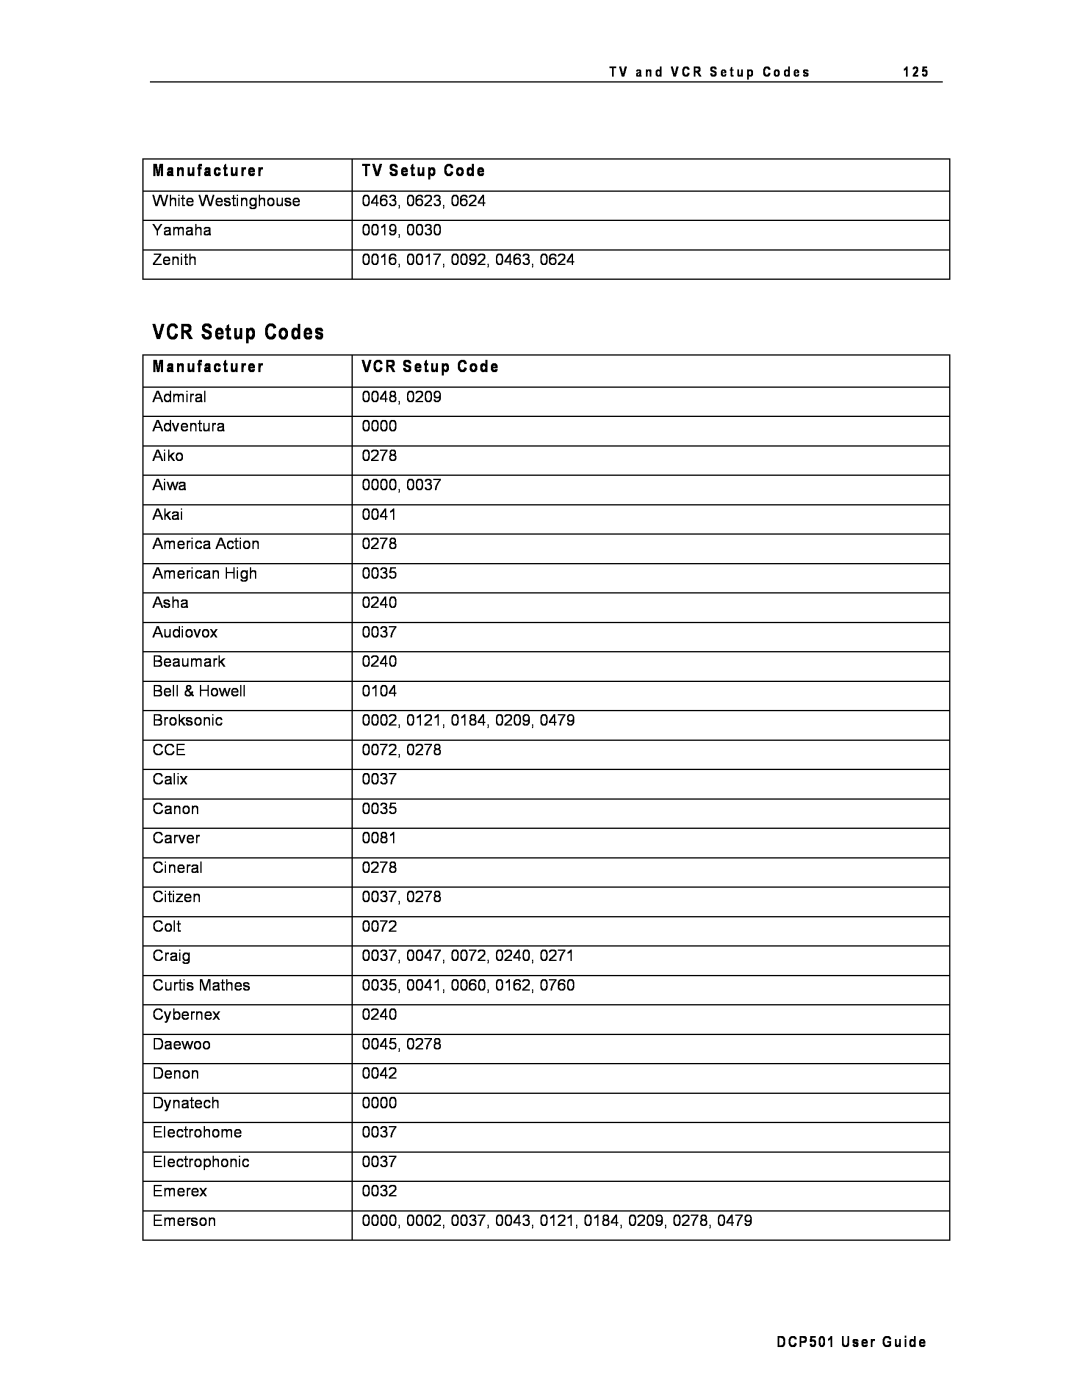 Motorola DCP501 manual VCR Setup Codes, Manufacturer, TV Setup Code 